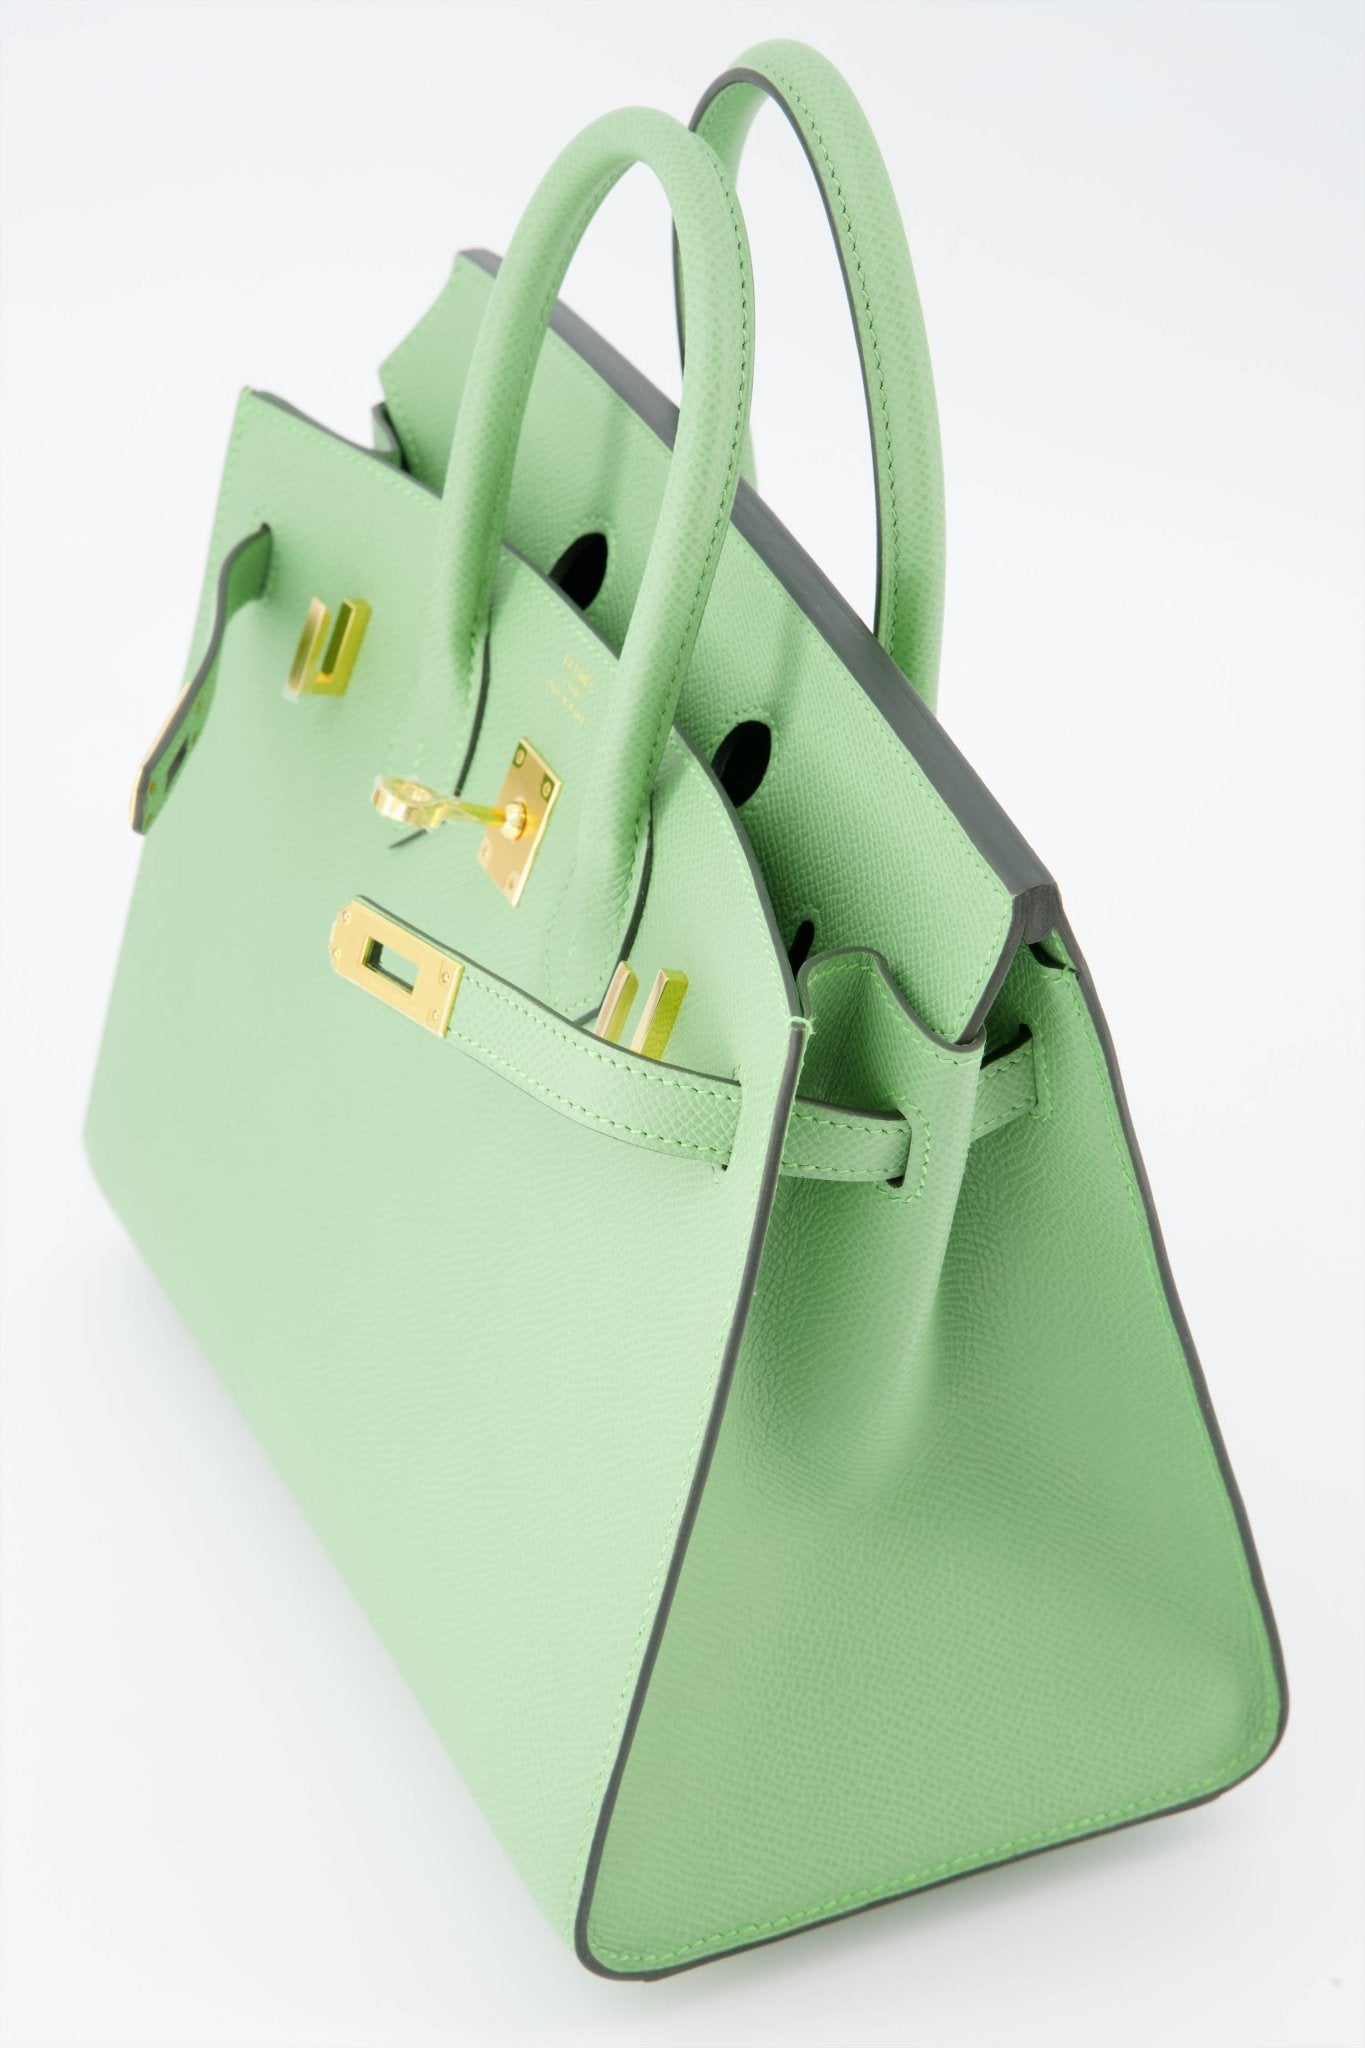 *Rare* Hermes Birkin 25 Sellier Handbag Vert Criquet Epsom Leather With Gold Hardware. Investment Piece